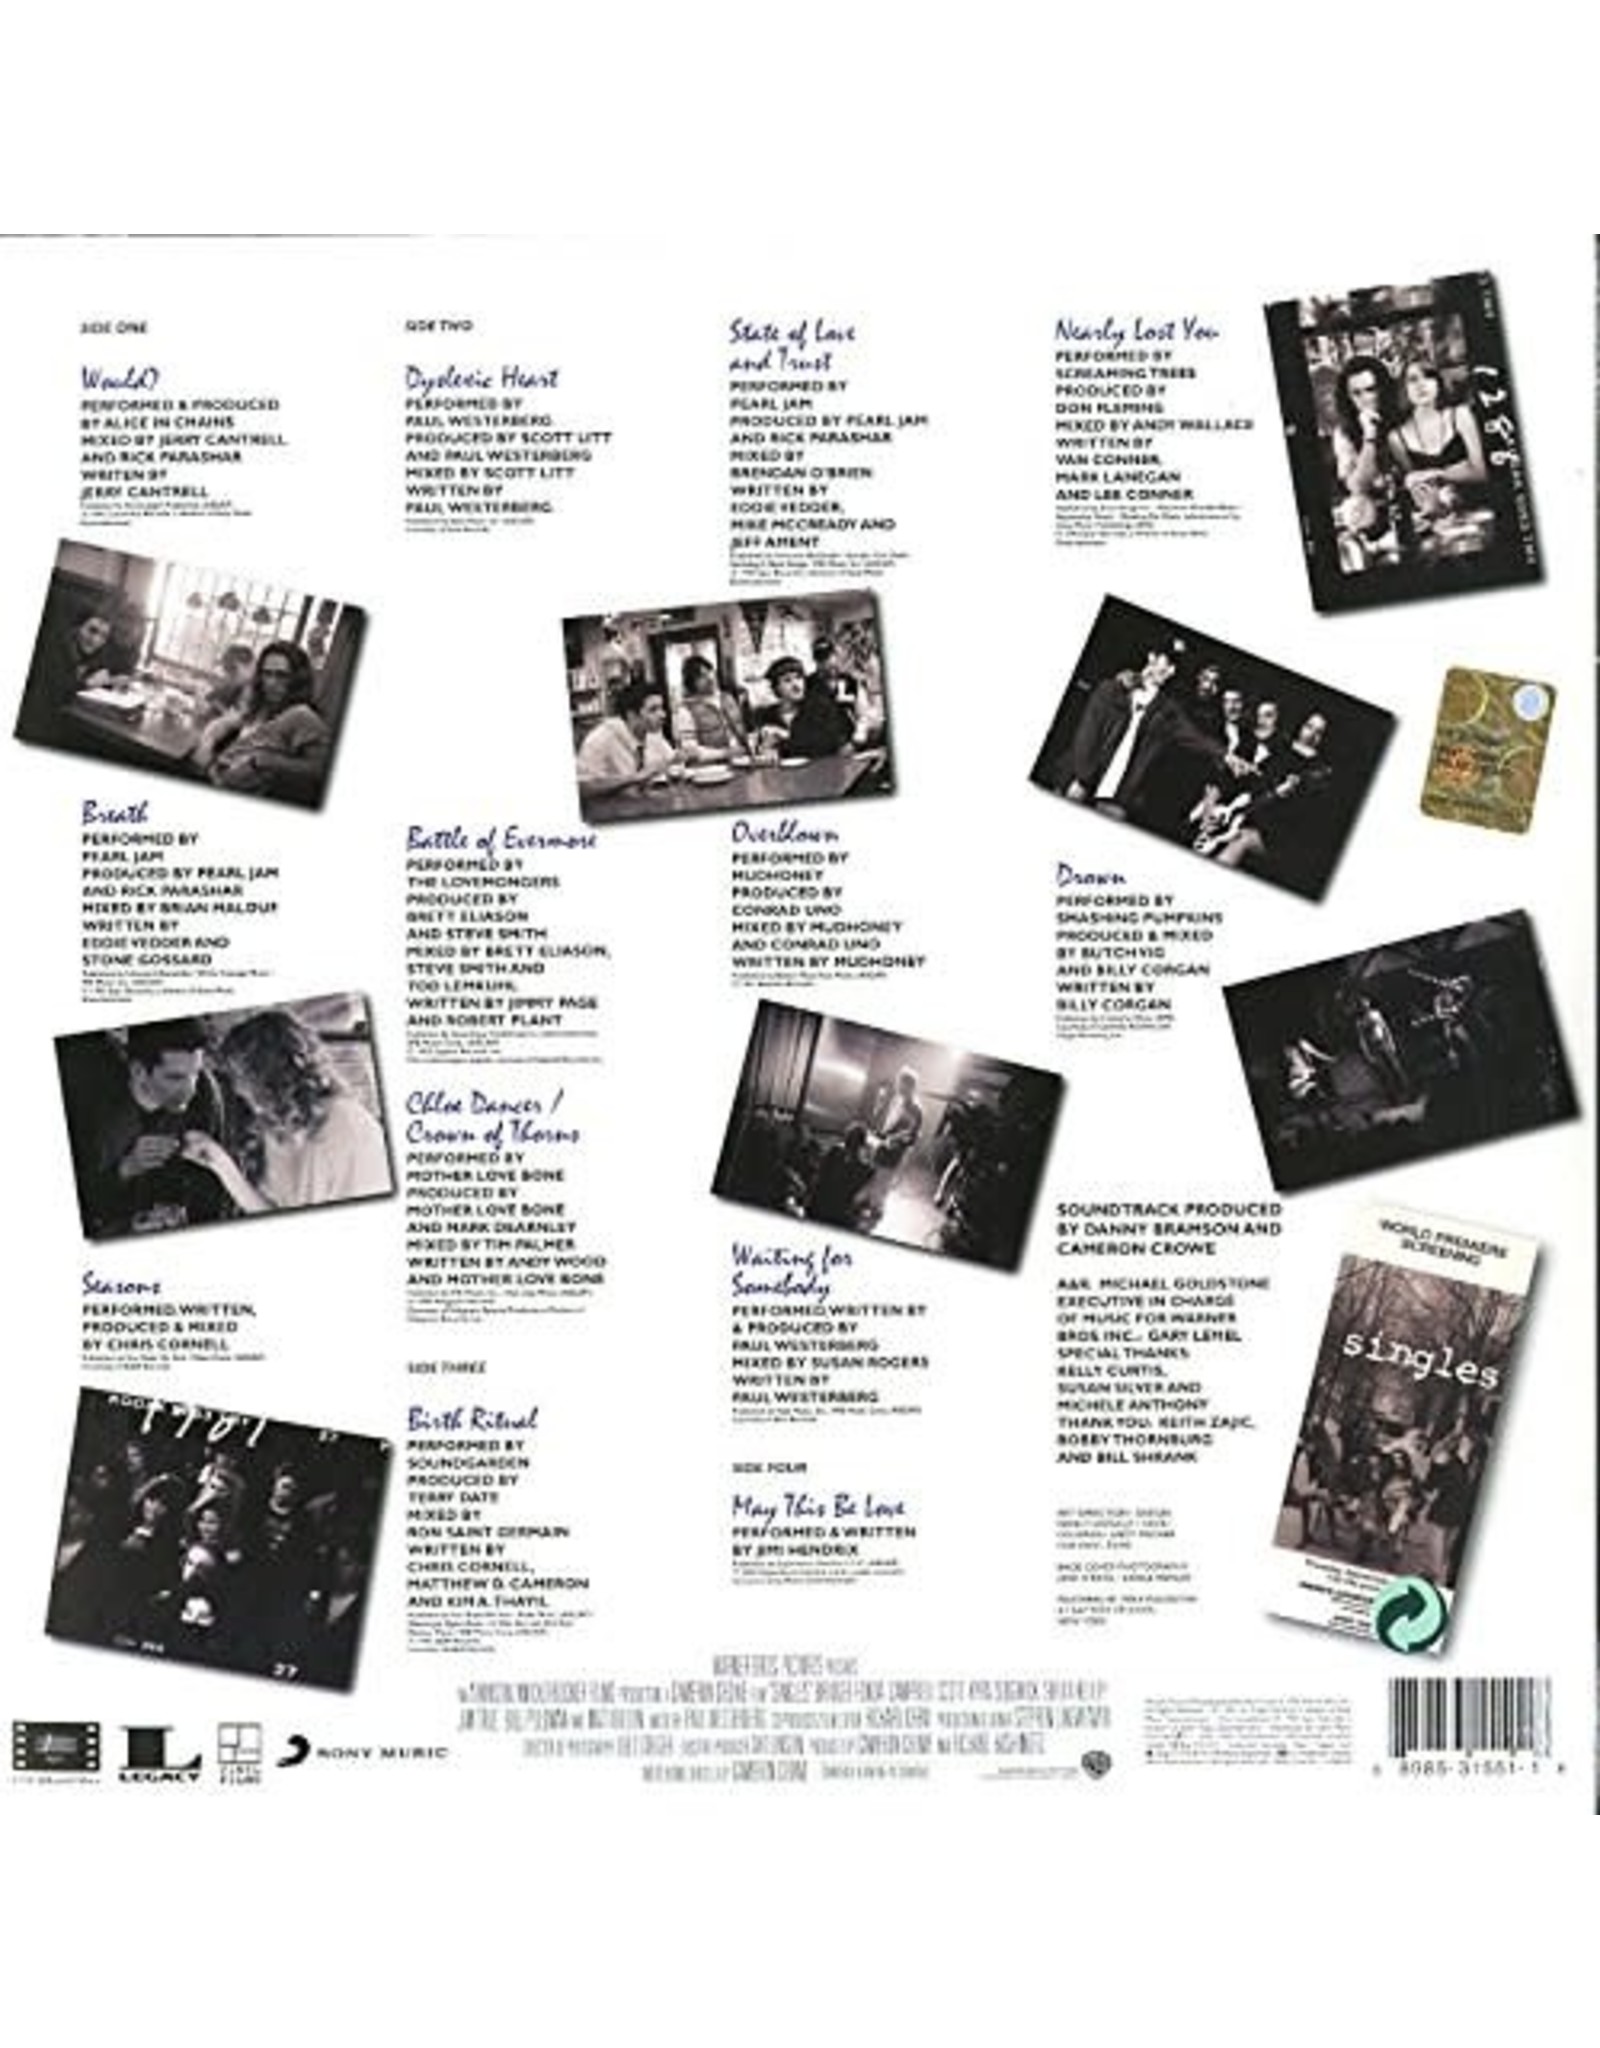 Daisy Chain Reaction 25th Anniversary Reissue (Vinyl and Bonus Tracks ONLY)